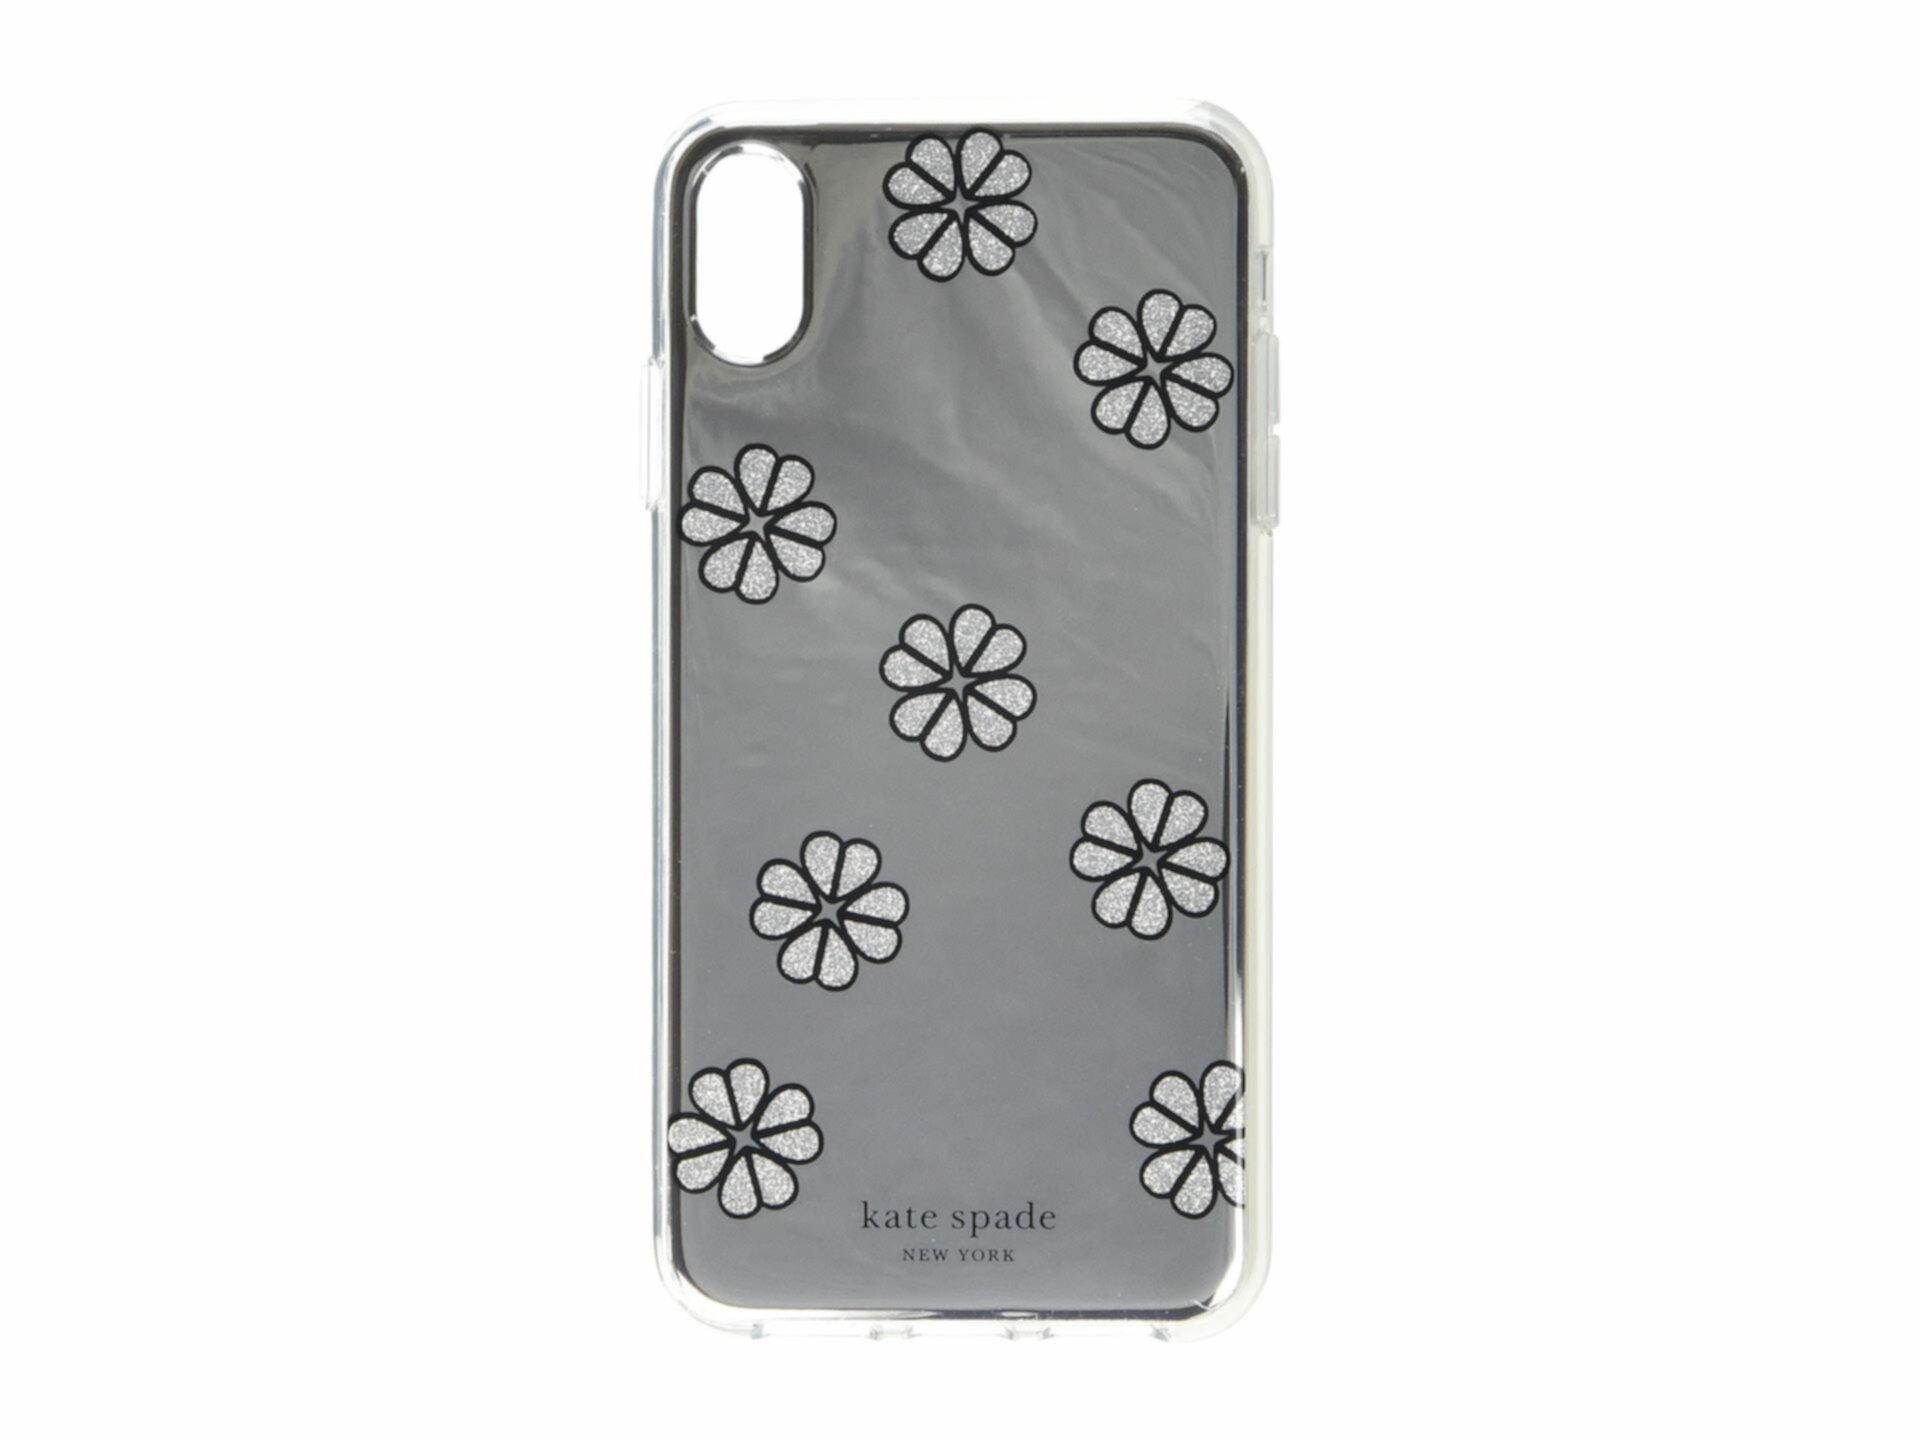 Чехол для телефона с зеркалом Spade Flower для iPhone XS Max Kate Spade New York